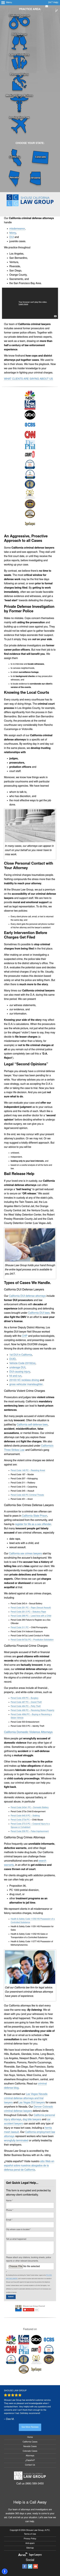 Shouse Law Group - Newport Beach CA Lawyers